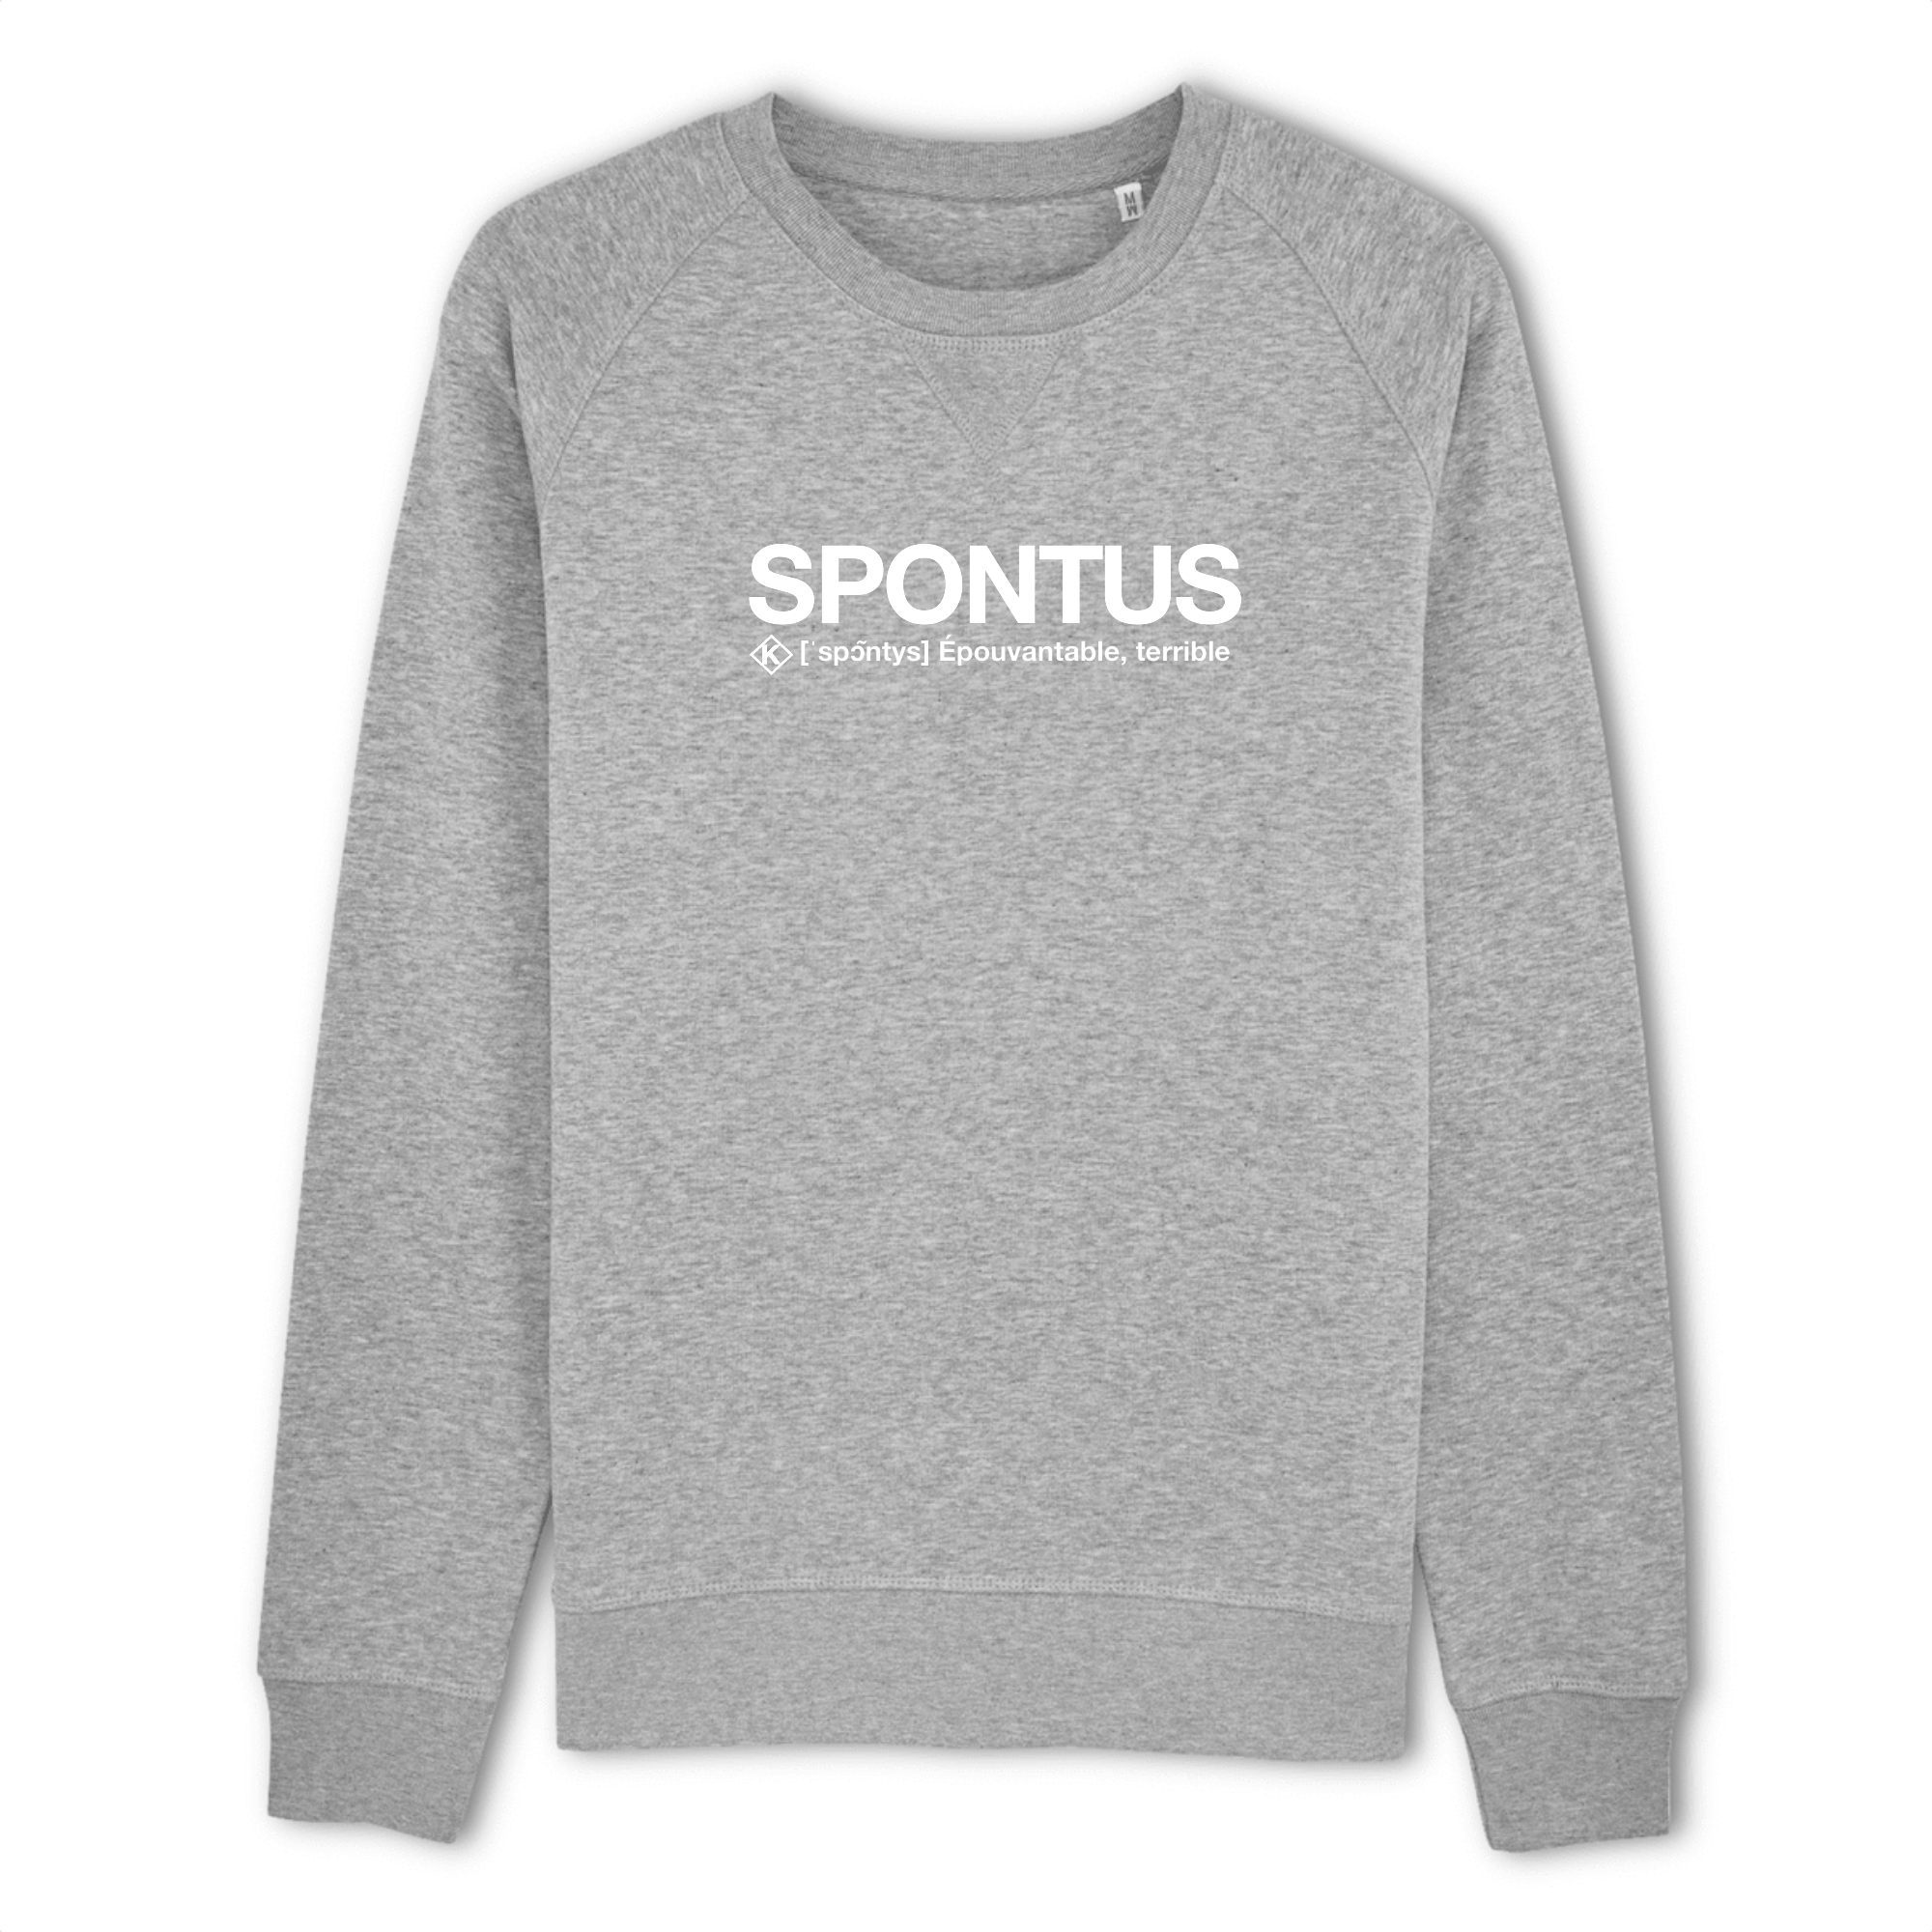 Spontus Sweatshirt (Epouvantable/Terrible)